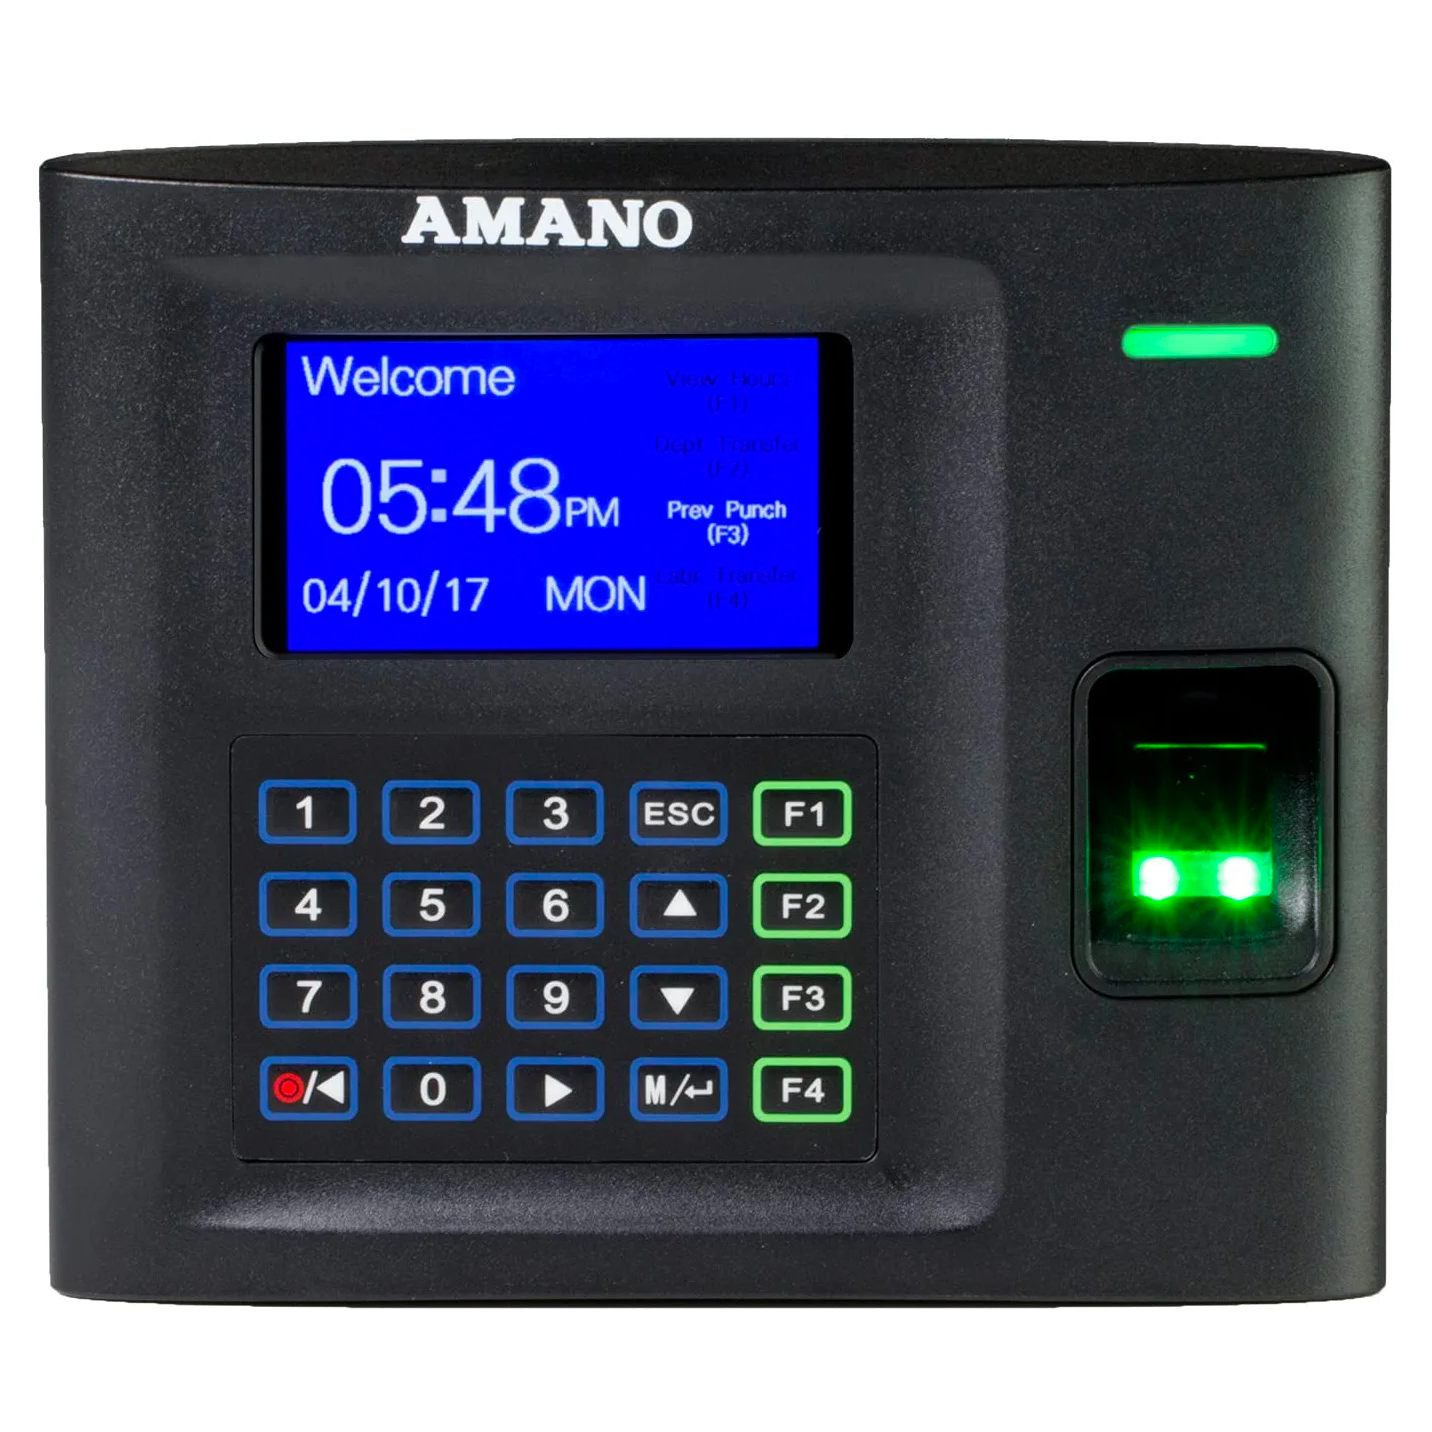 Amano MTX-30F/A963 Fingerprint Time Clock Only